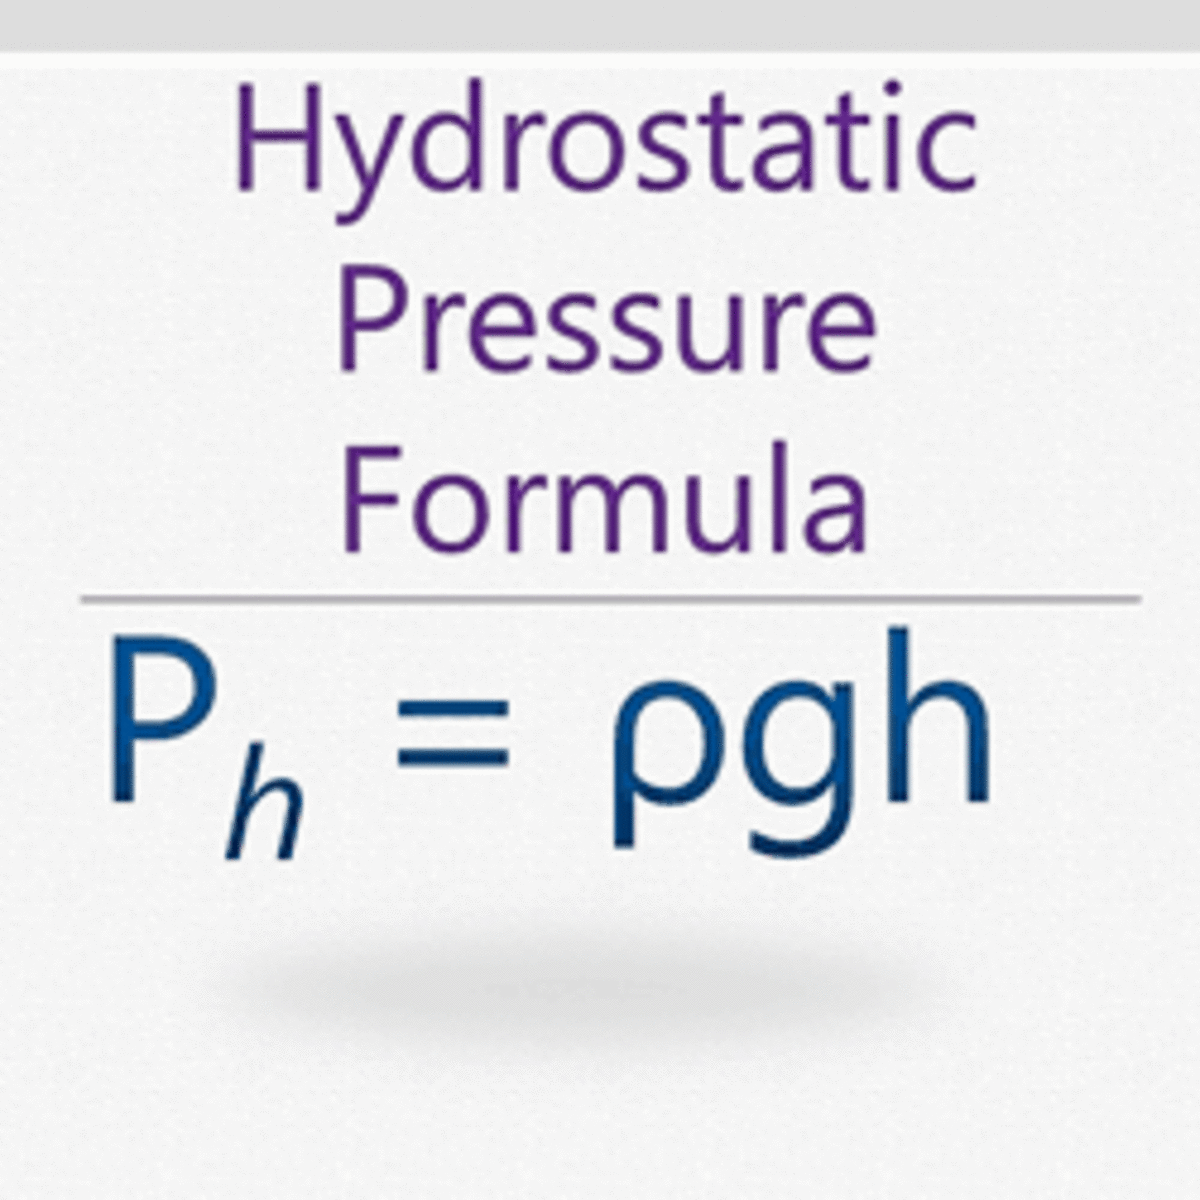 Hydrostatic Pressure Formula and Sample Problems